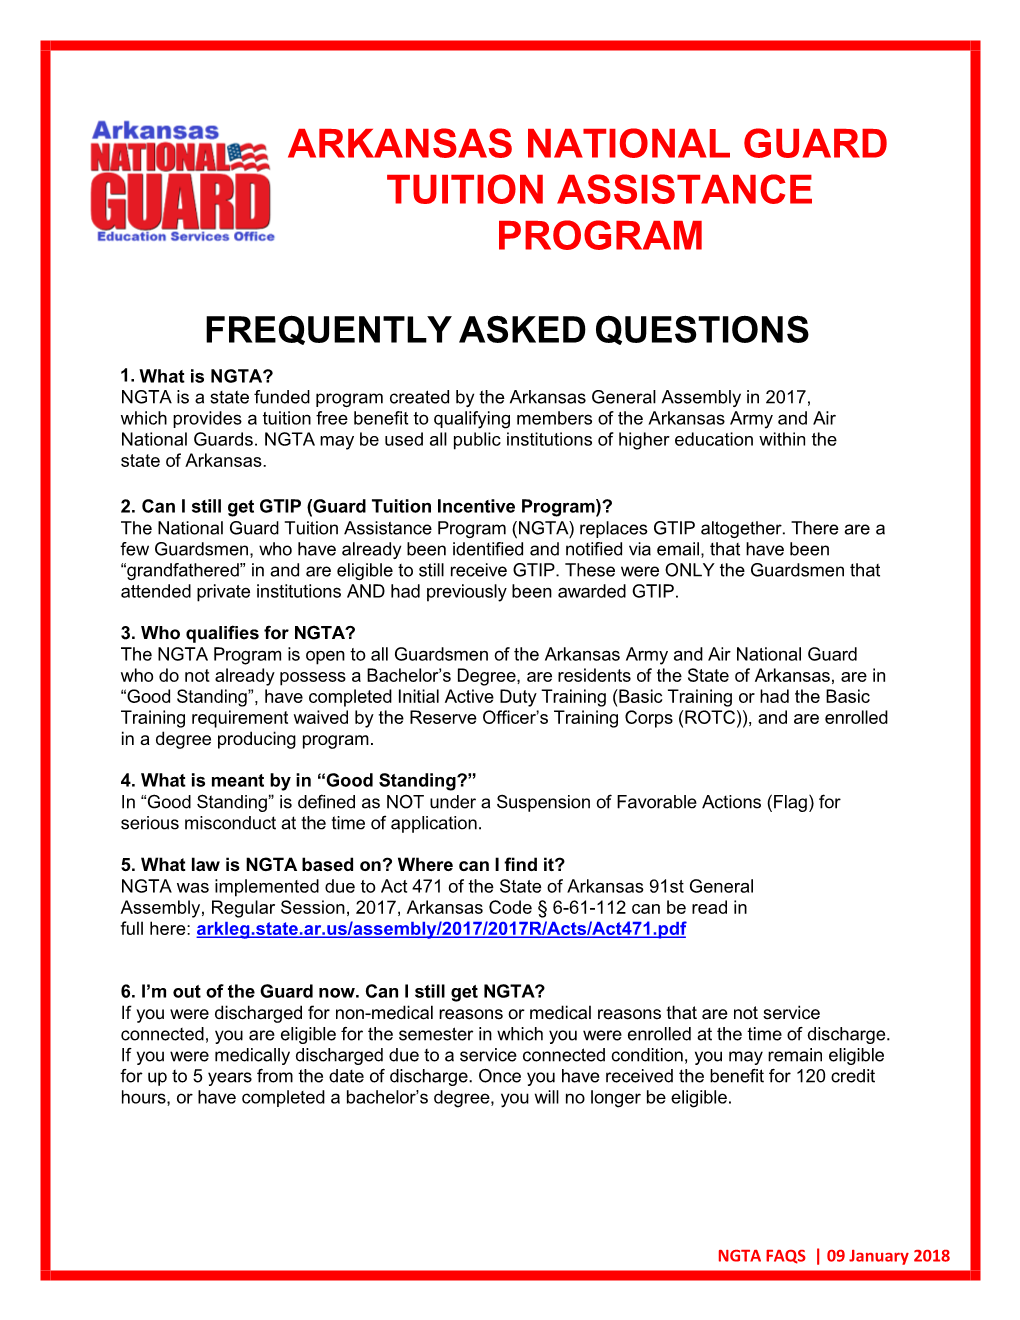 Arkansas National Guard Tuition Assistance Program